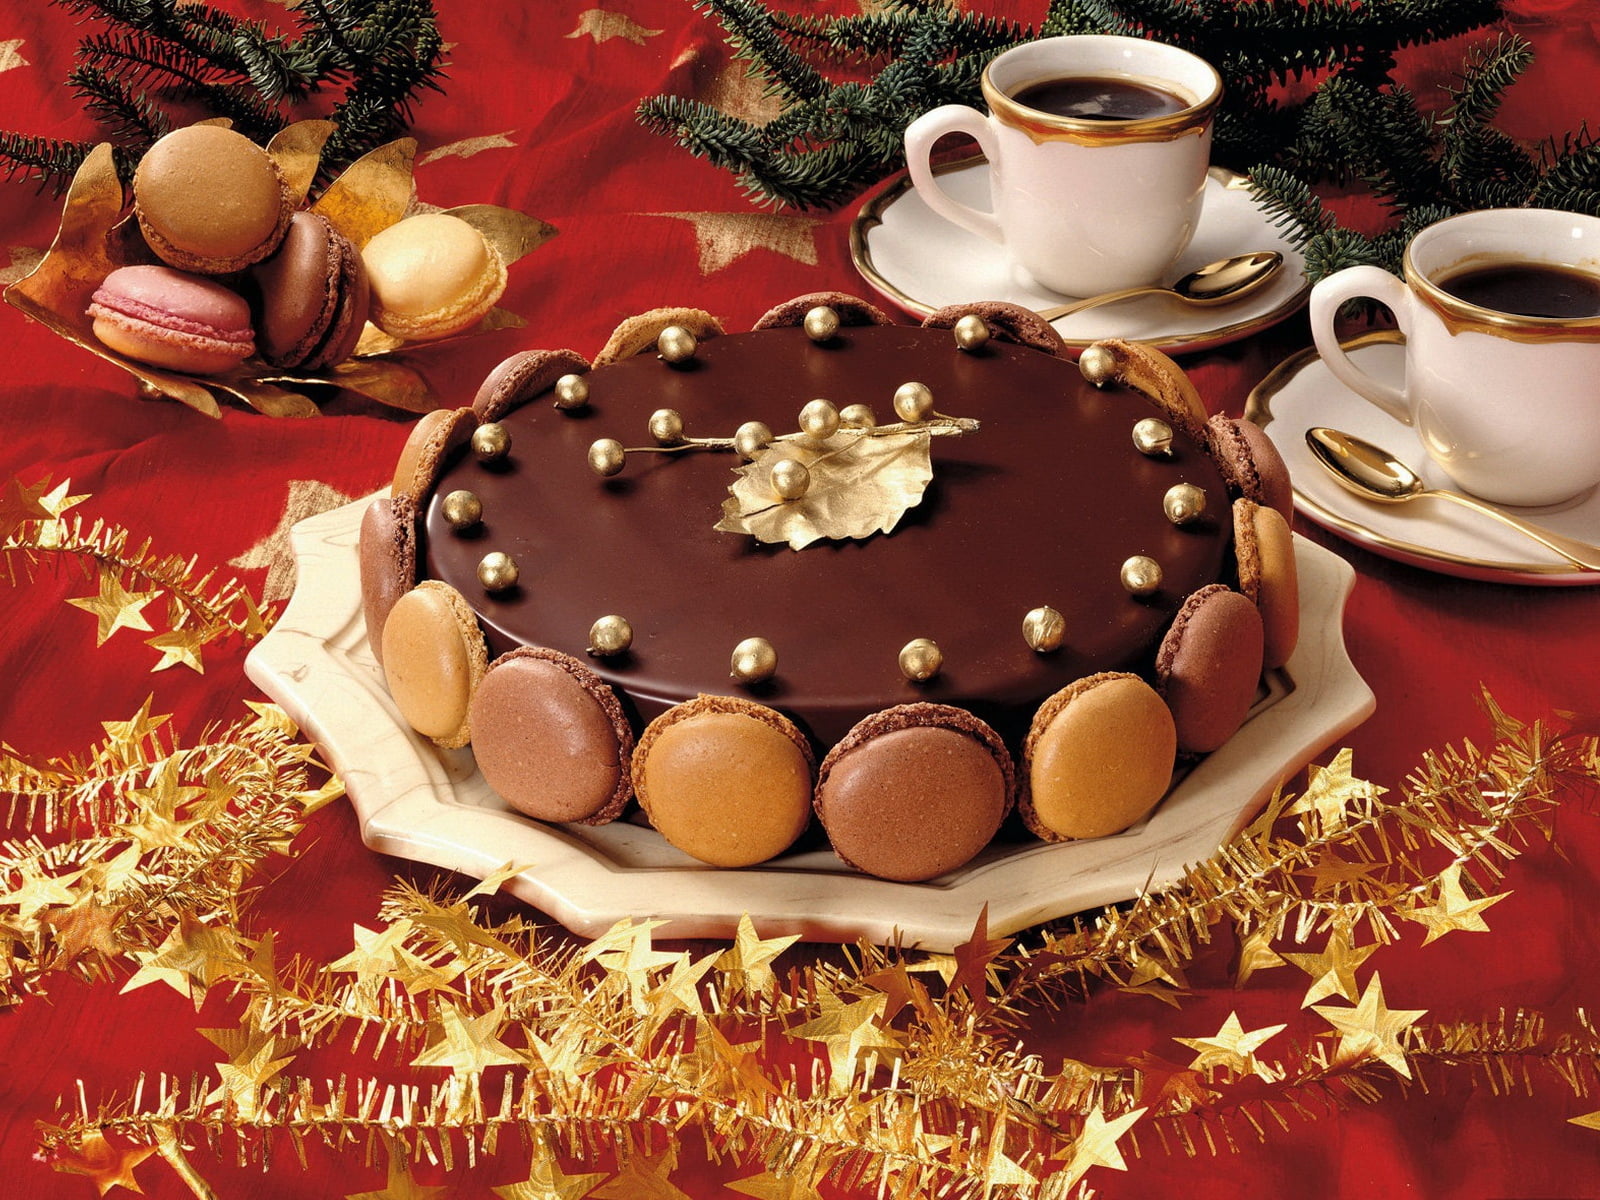 chocolate cake with macarons, pie, sweet, dessert, glaze, festive table